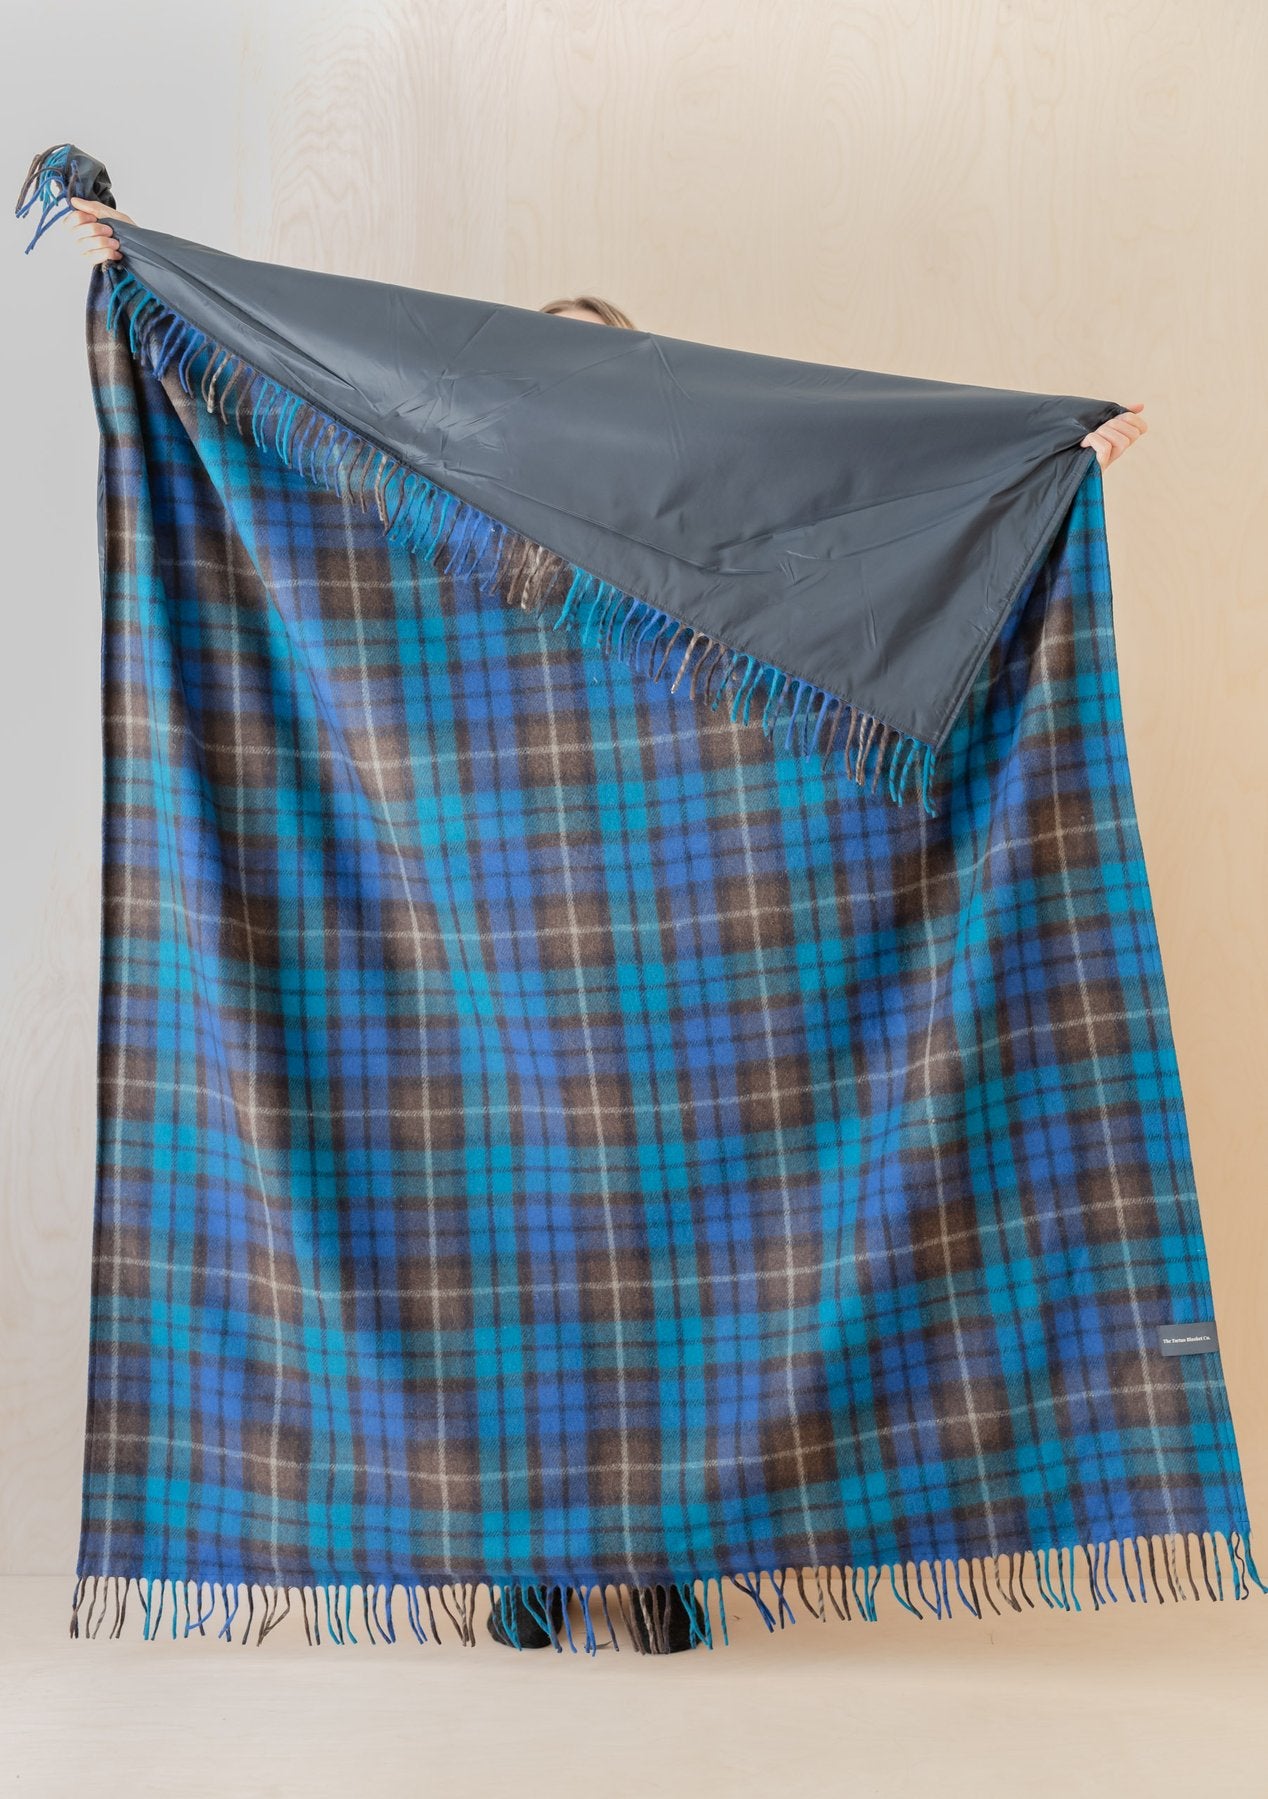 Recycled Wool Picnic Blanket in Buchanan Blue Tartan